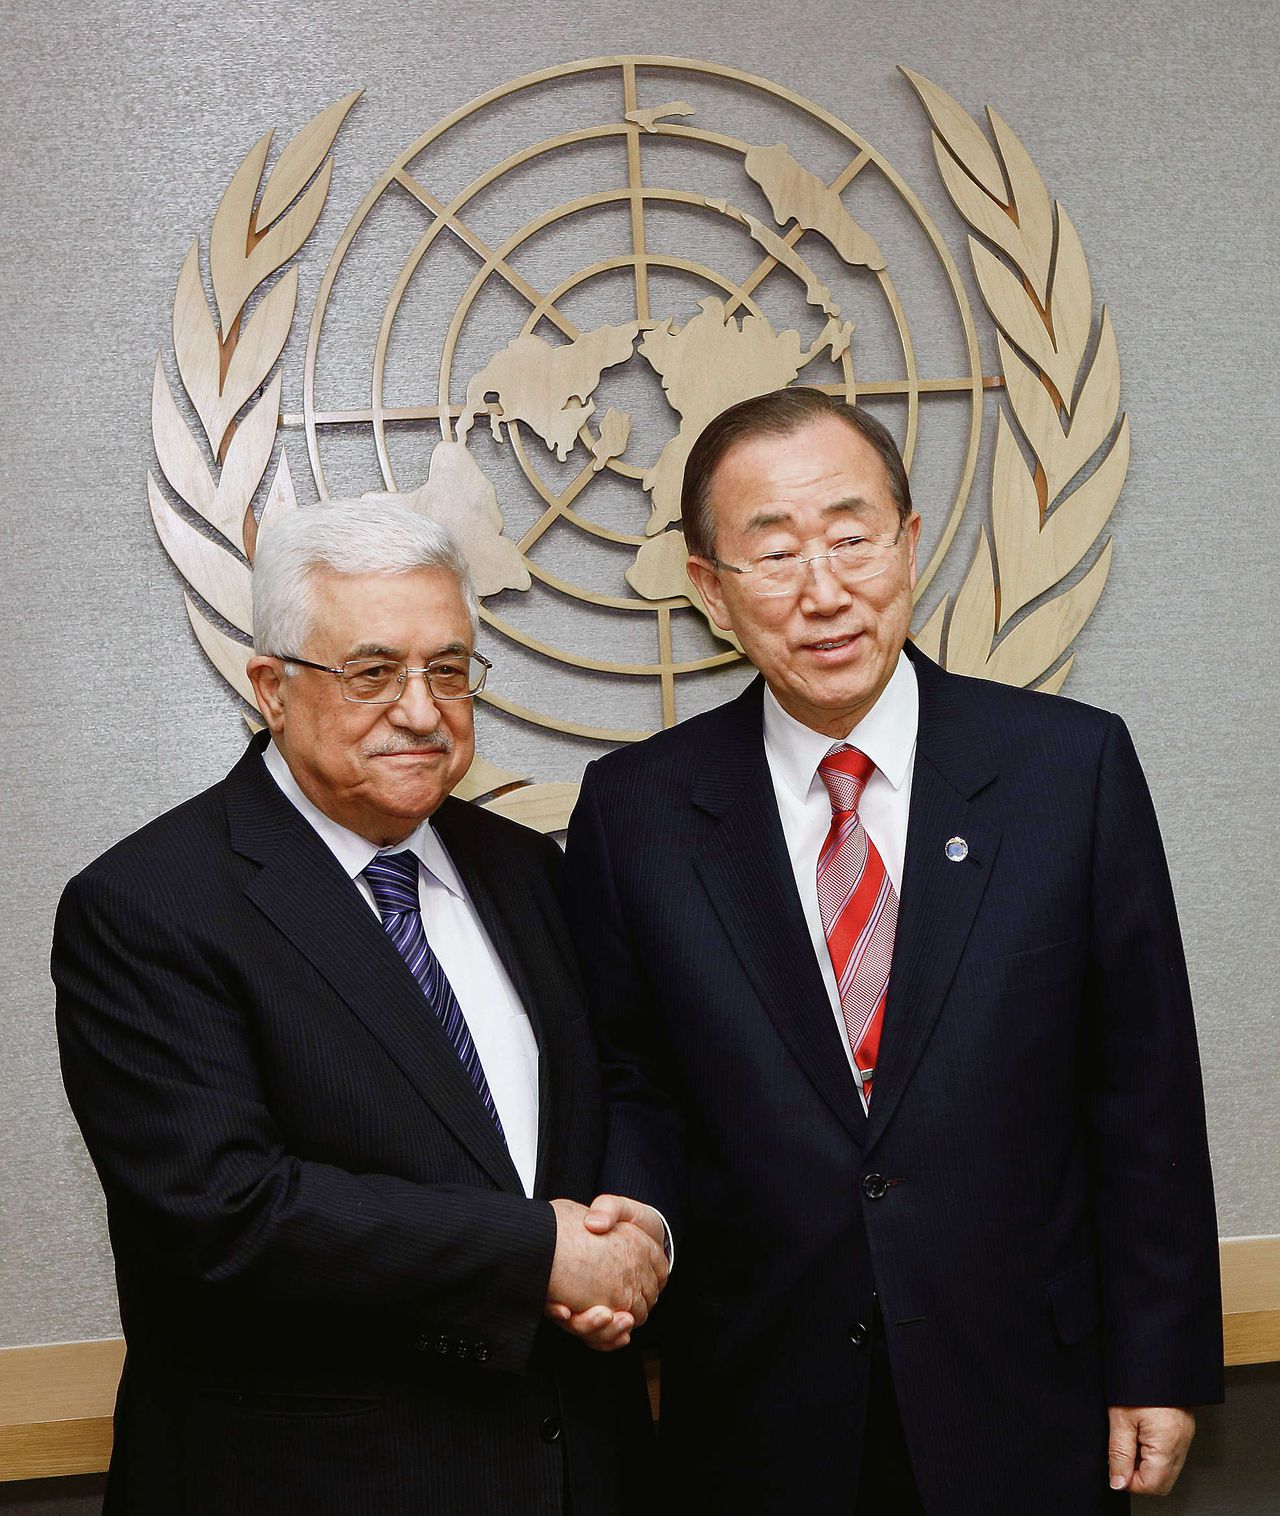 De Palestijnse president Mahmoud Abbas (links) ontmoette gisteren in de VN in New York secretaris-generaal Ban Ki-moon.